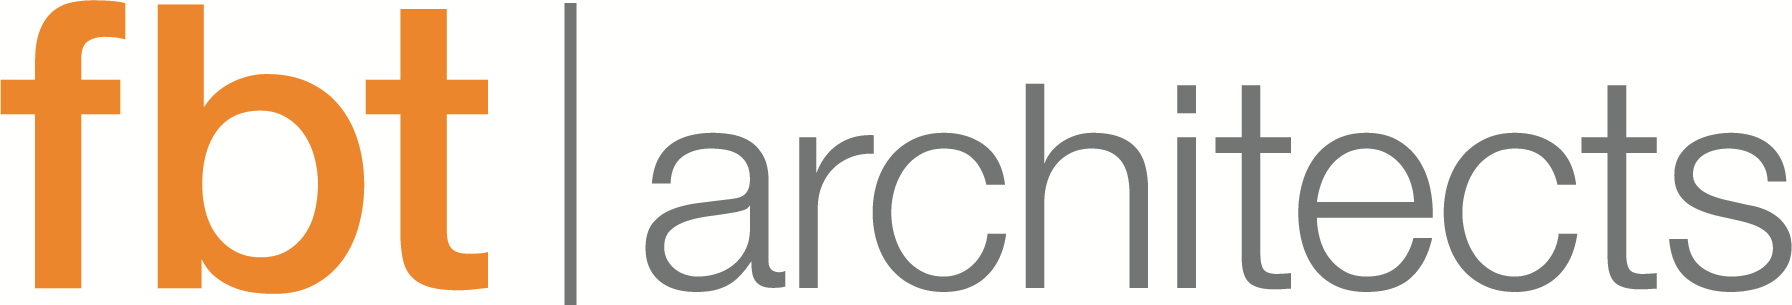 logo for fbt architects